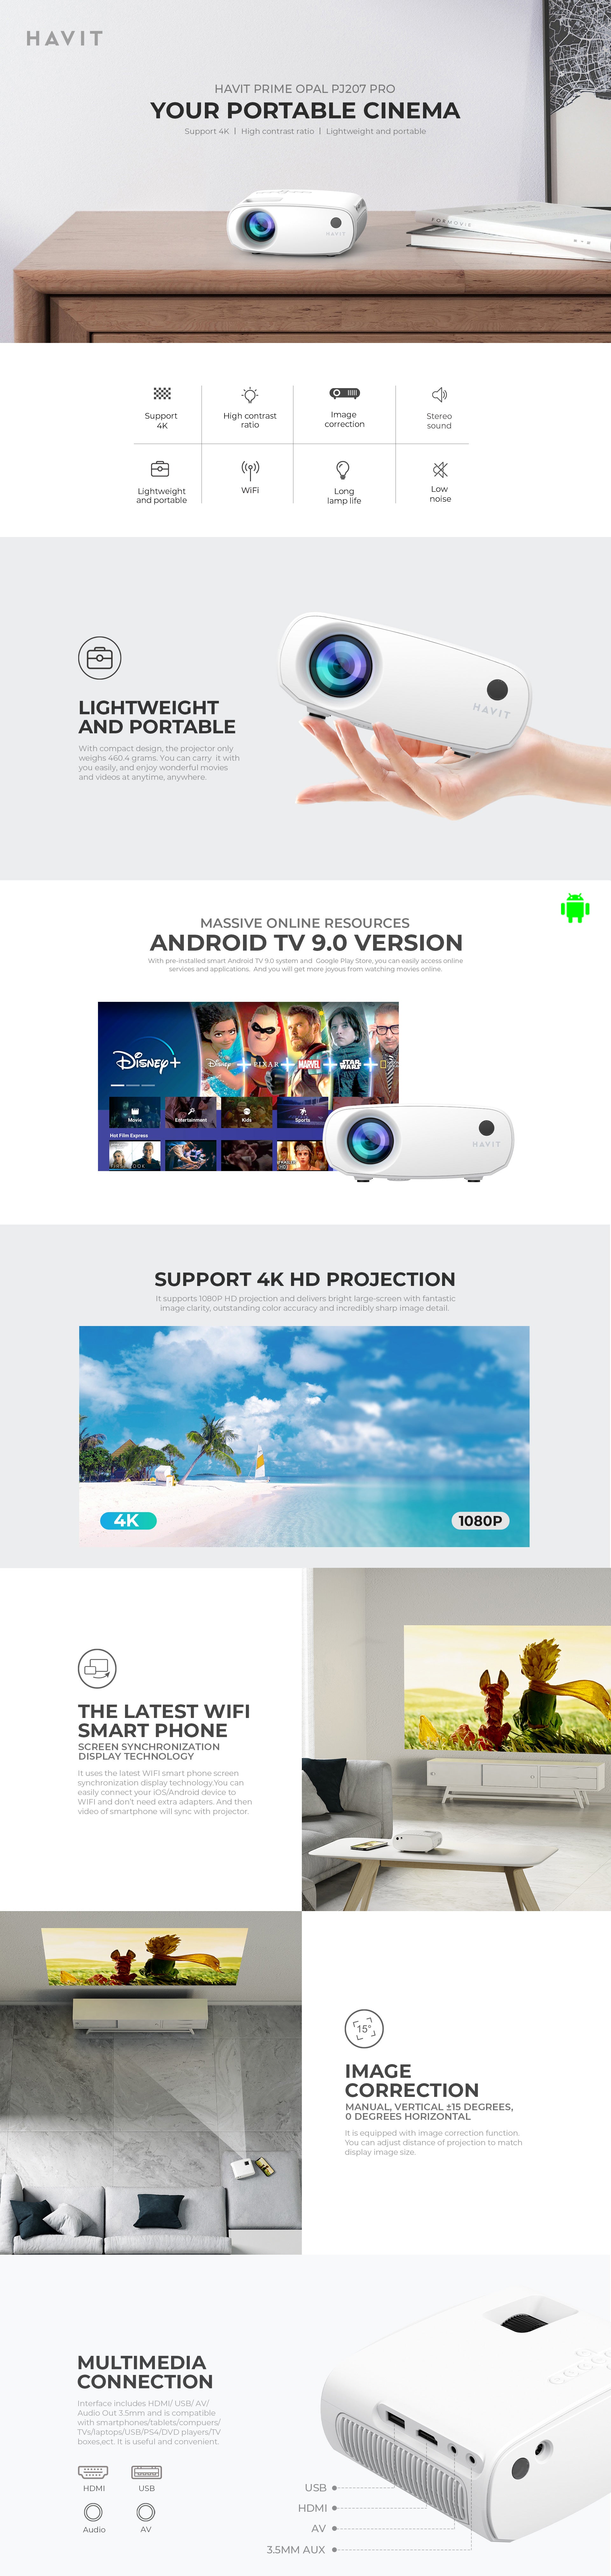 Mini Proyector Android TV Wi-fi HAVIT Pj207 Pro / Full HD1080p